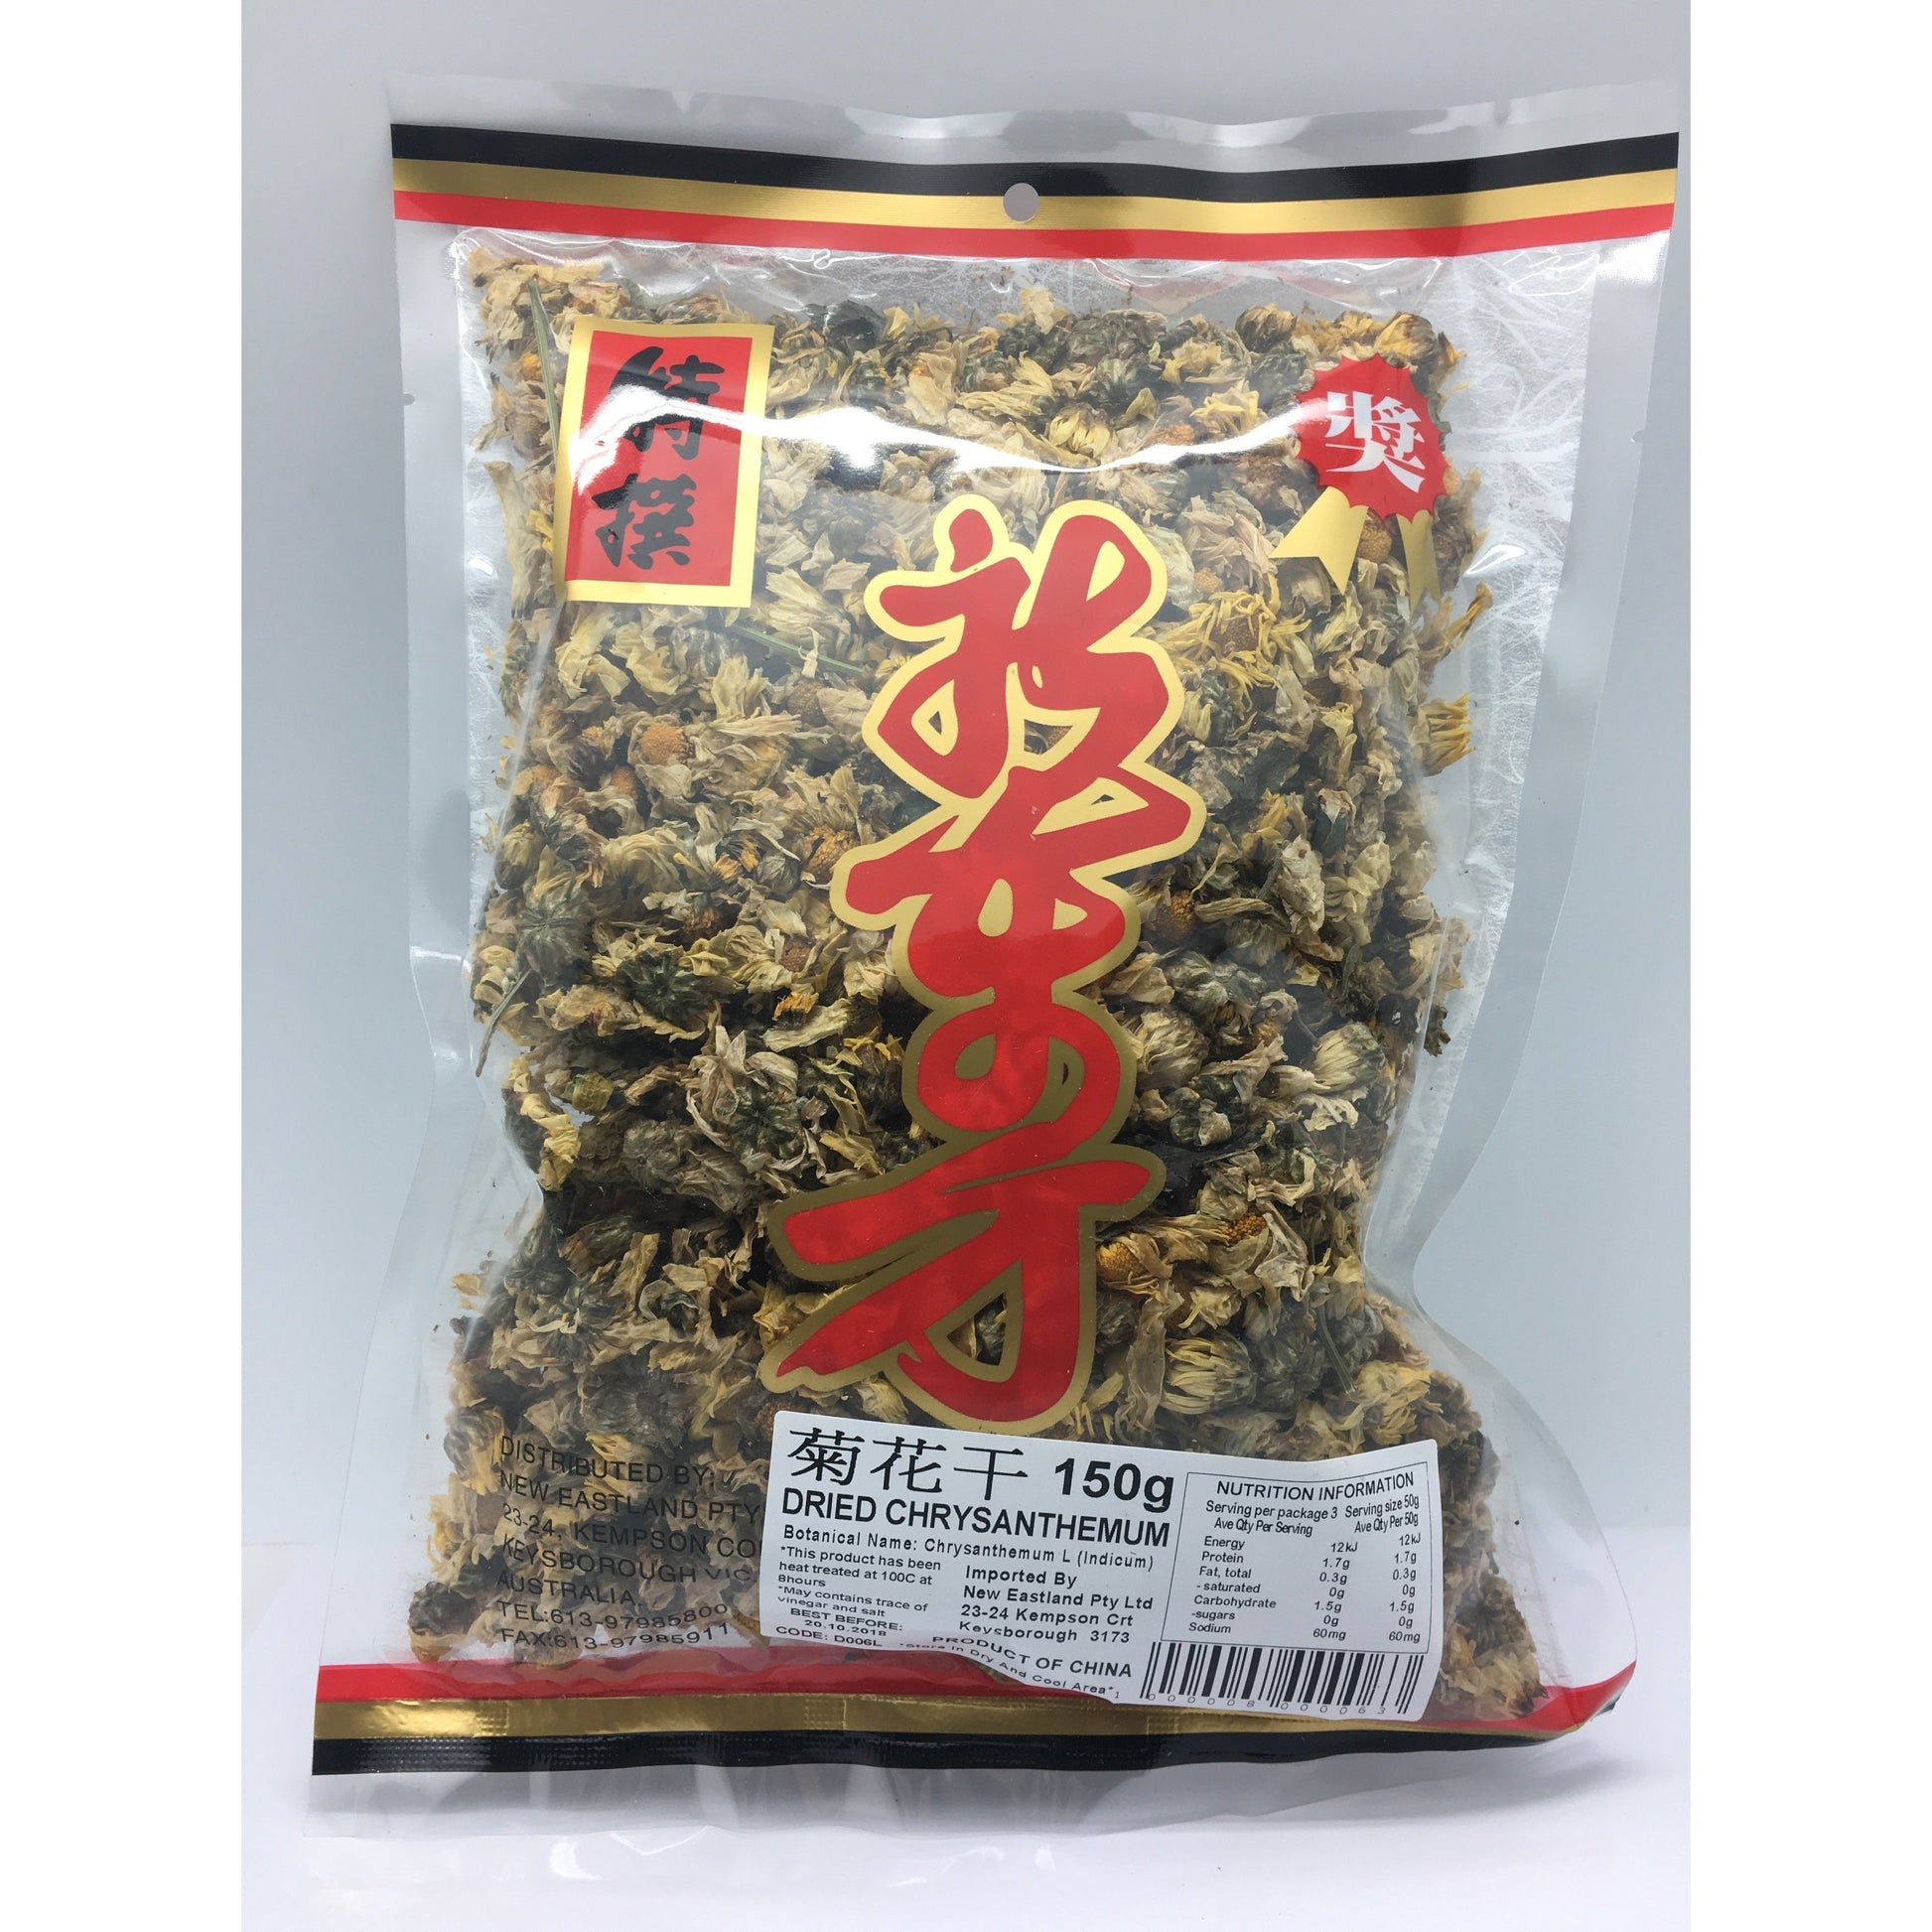 D006L New Eastland Pty Ltd - Dried Chrysanthemum 150g - 25 bags / 1CTN - New Eastland Pty Ltd - Asian food wholesalers